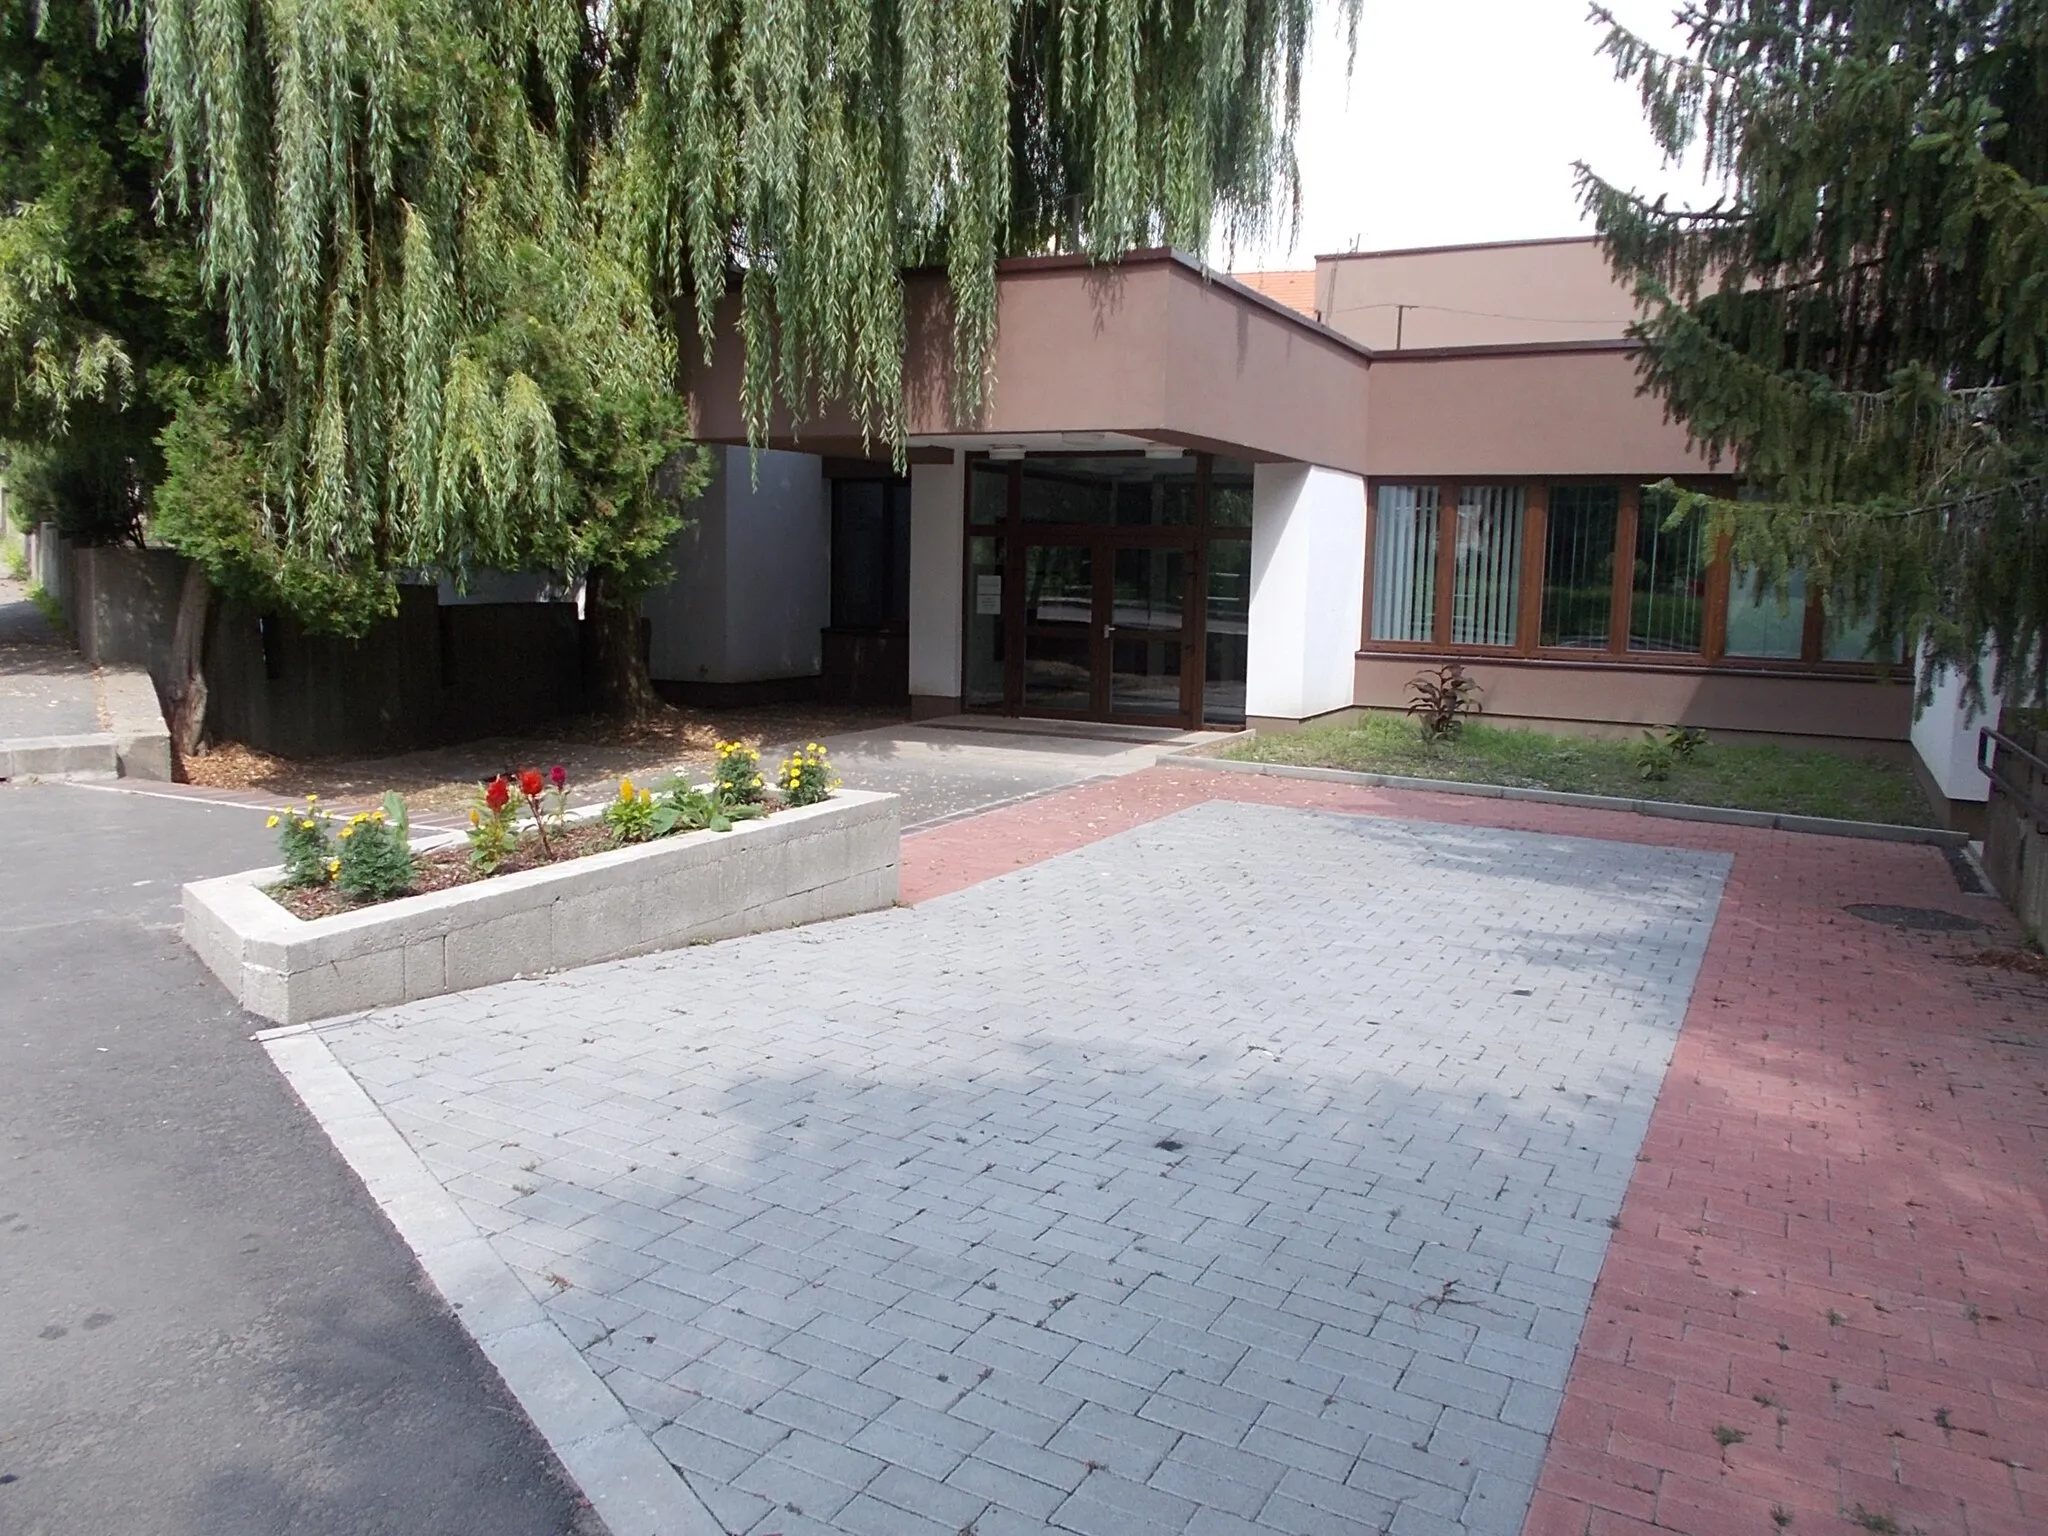 Photo showing: : Gerelyes Endre House of Culture (former). Now education institution partly/temporarly?  - Gorkij Boulevard, Zagyvapálfalva, Salgótarján, Nógrád County, Hungary.